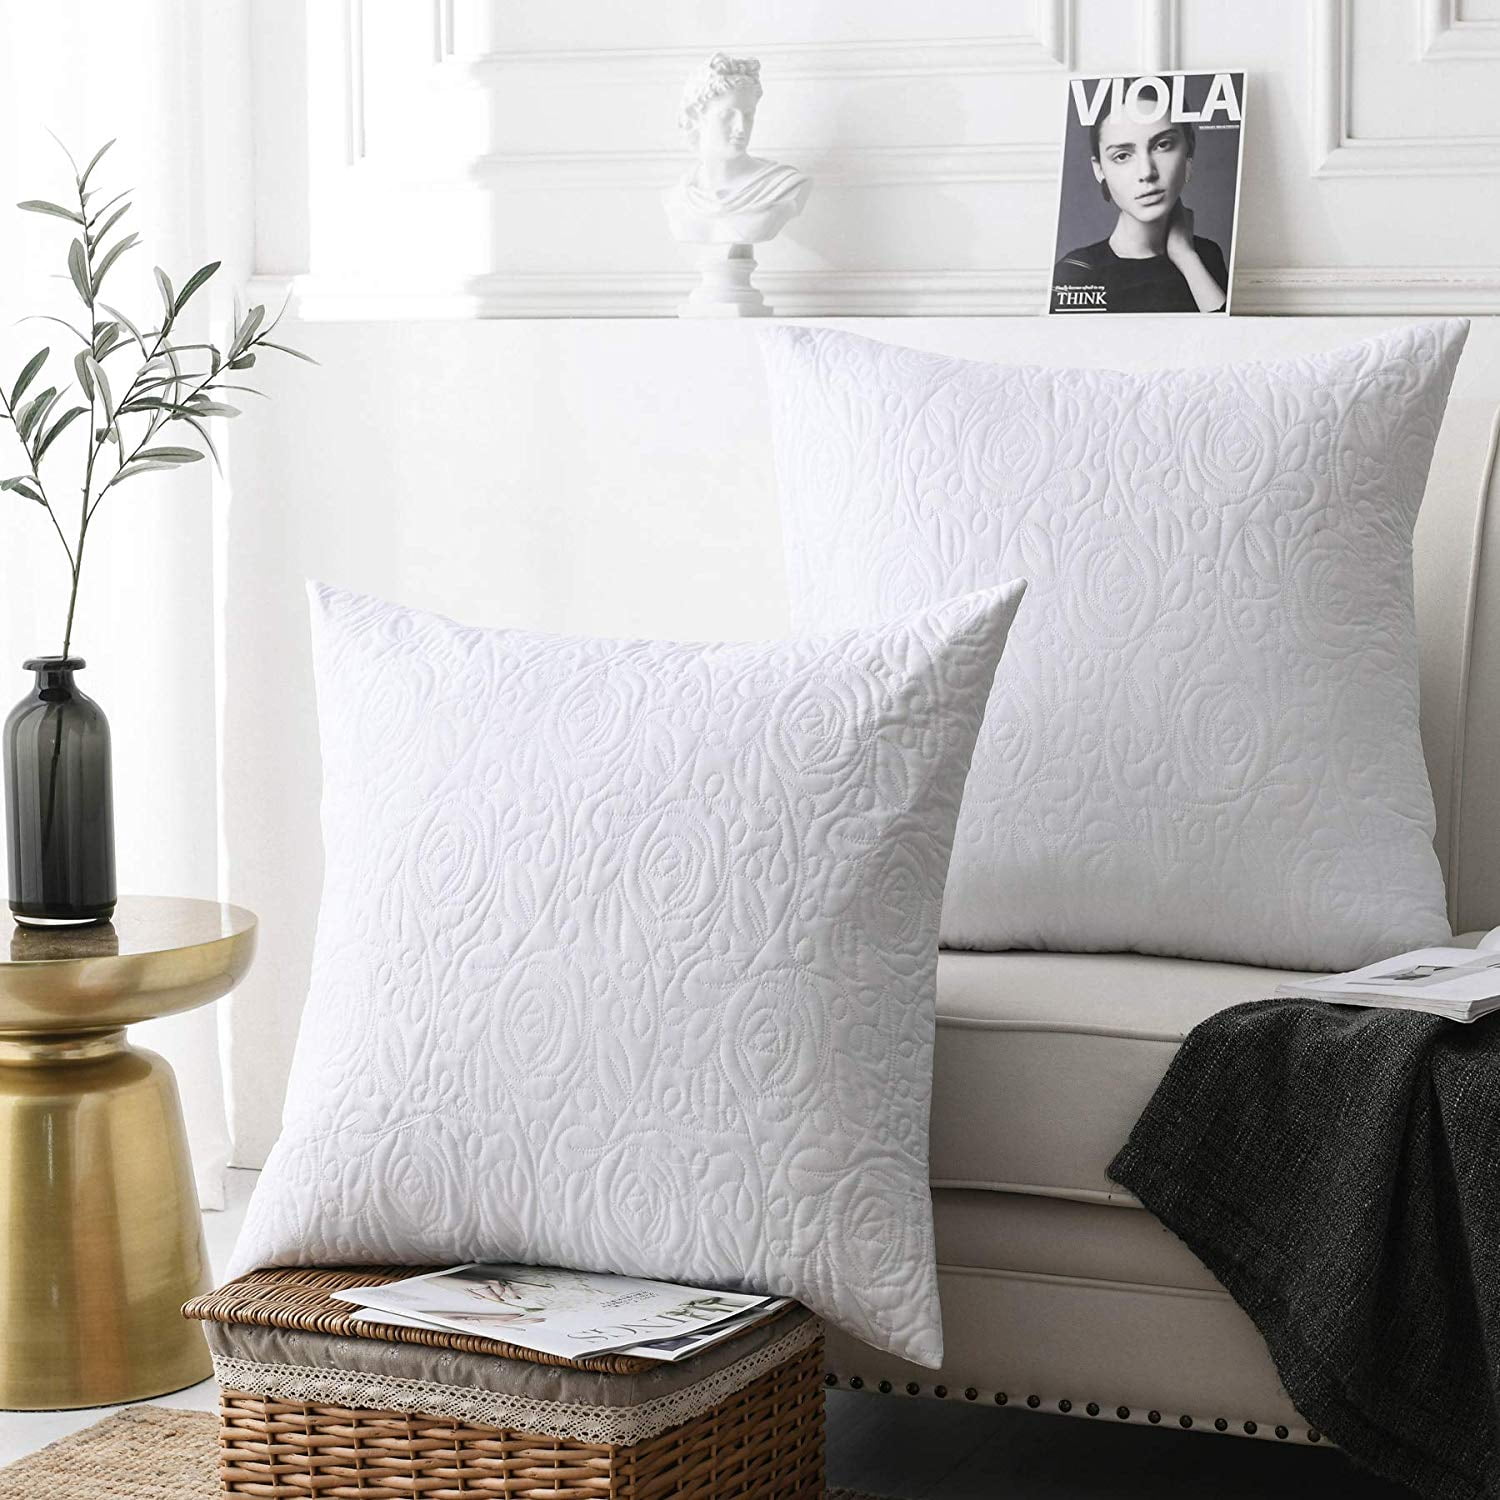 Bedsure Euro Pillow Sham Covers 26x26 Set of 2 Brushed Microfiber Euro Sham Pillow Covers Super Soft and Cozy White European Pillow Shams 